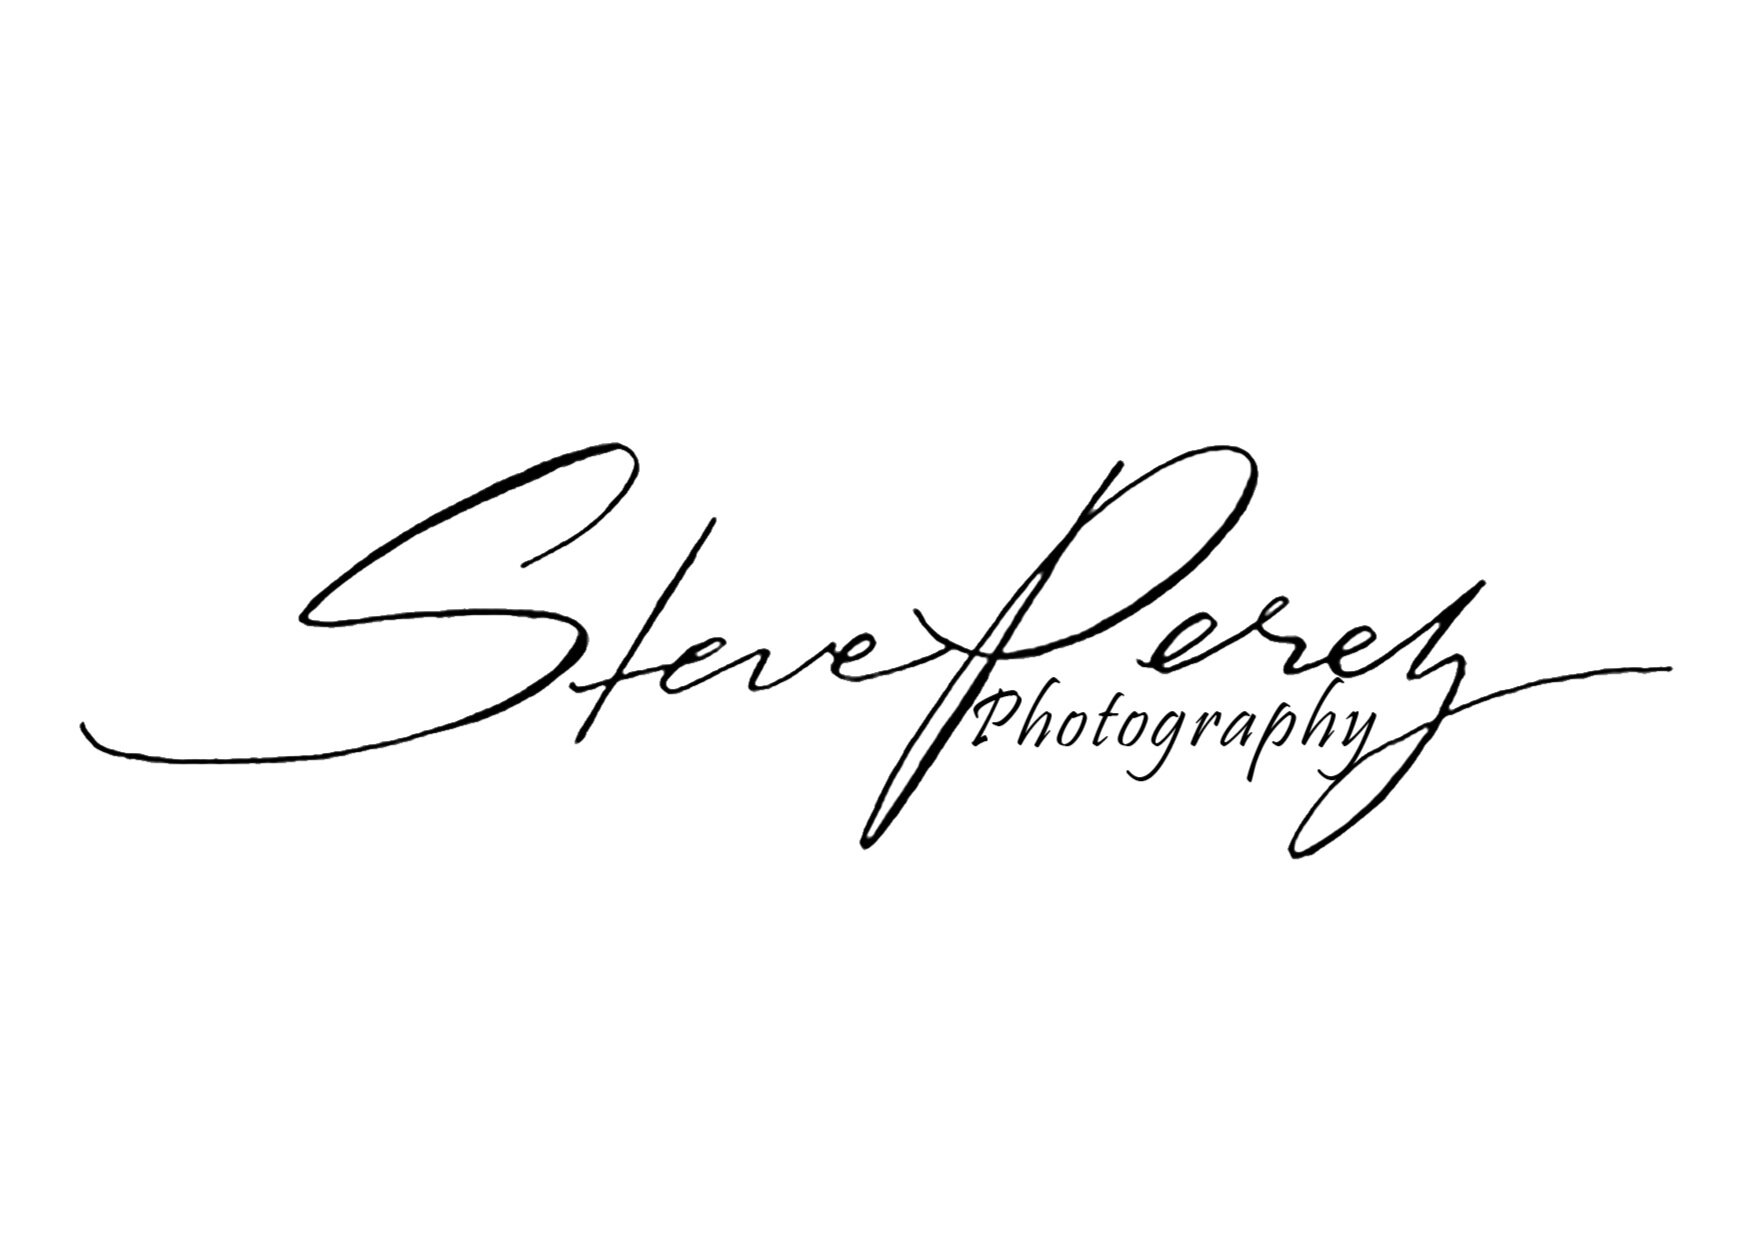 Steve Perez Photography